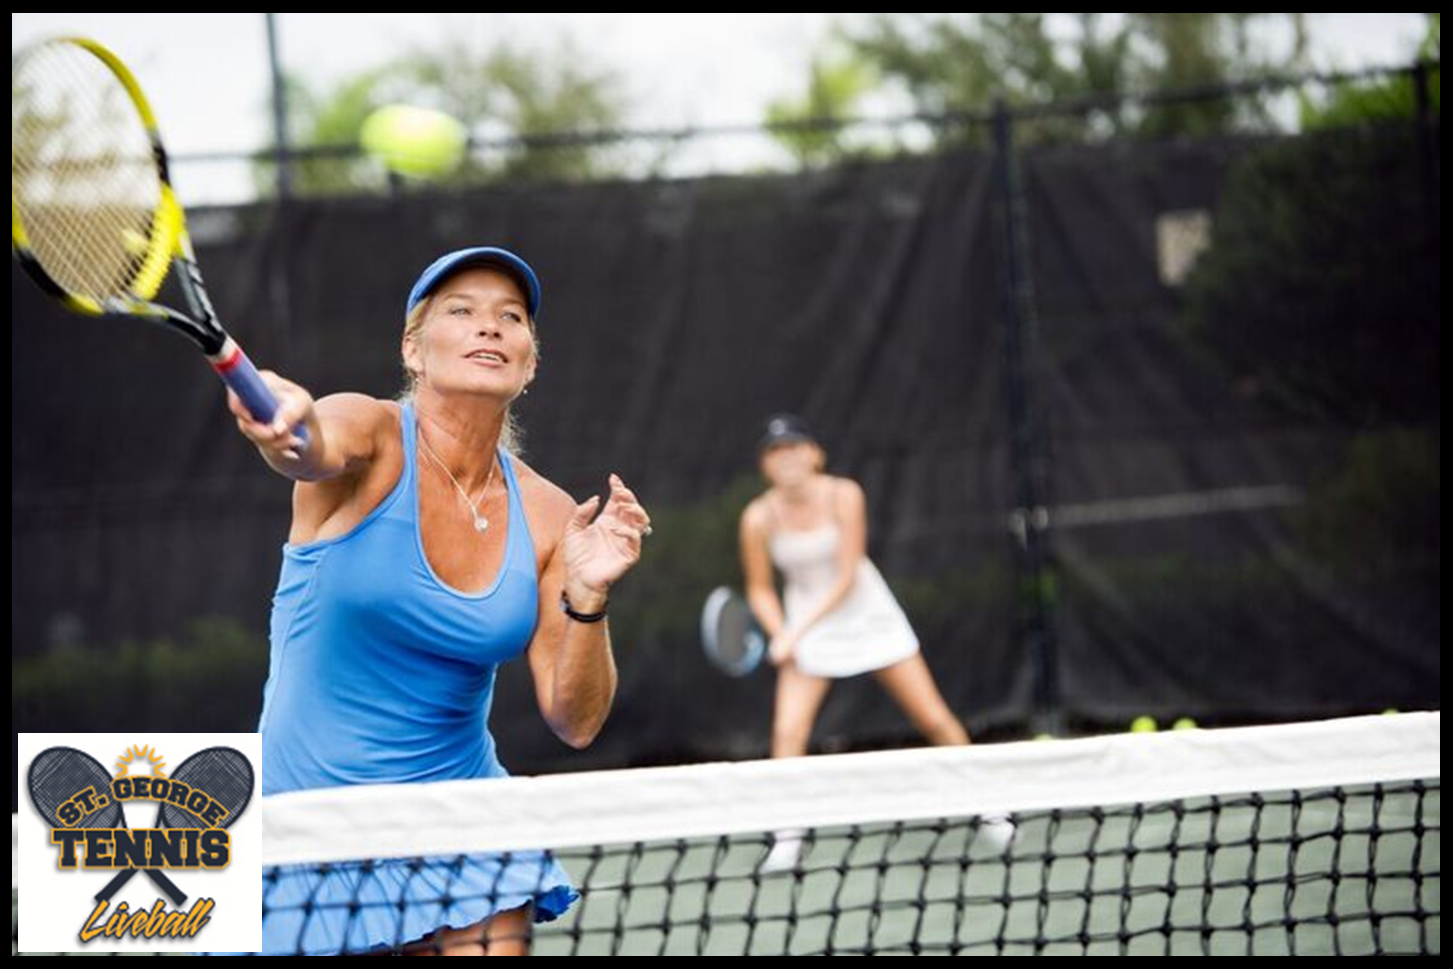 Liveball - Tennis Drop-In Clinic